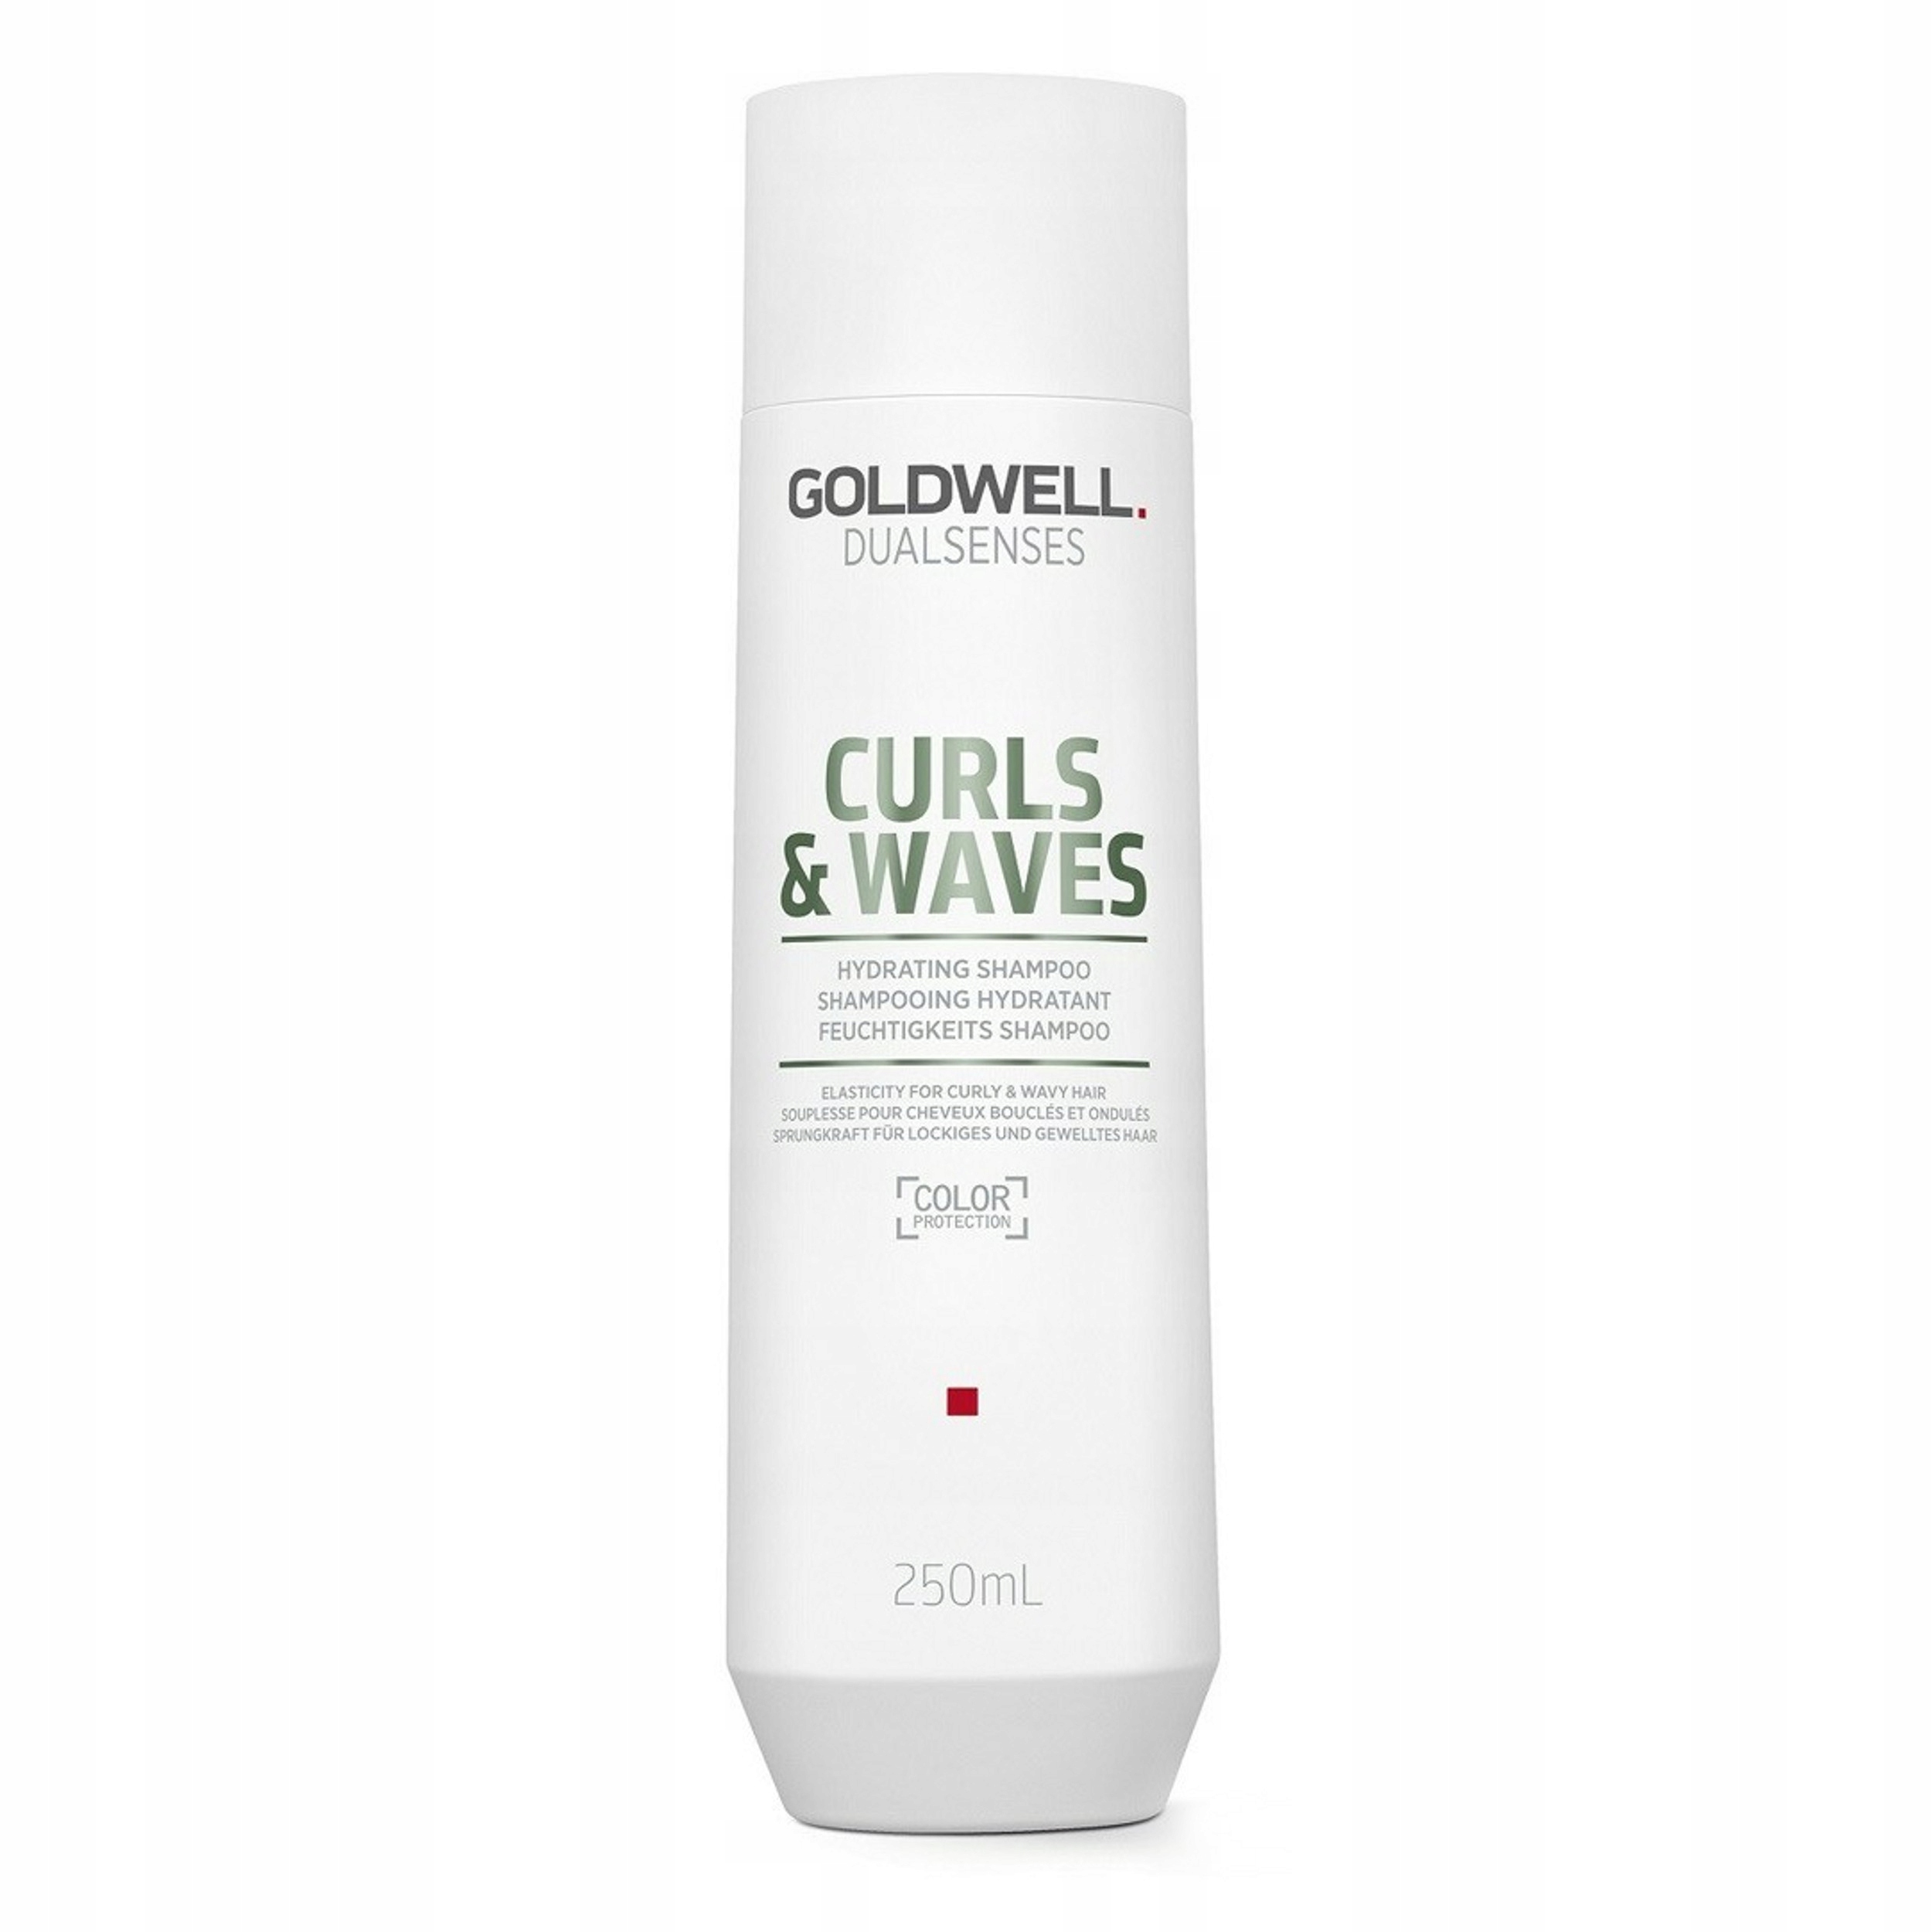 goldwell szampon curly twist